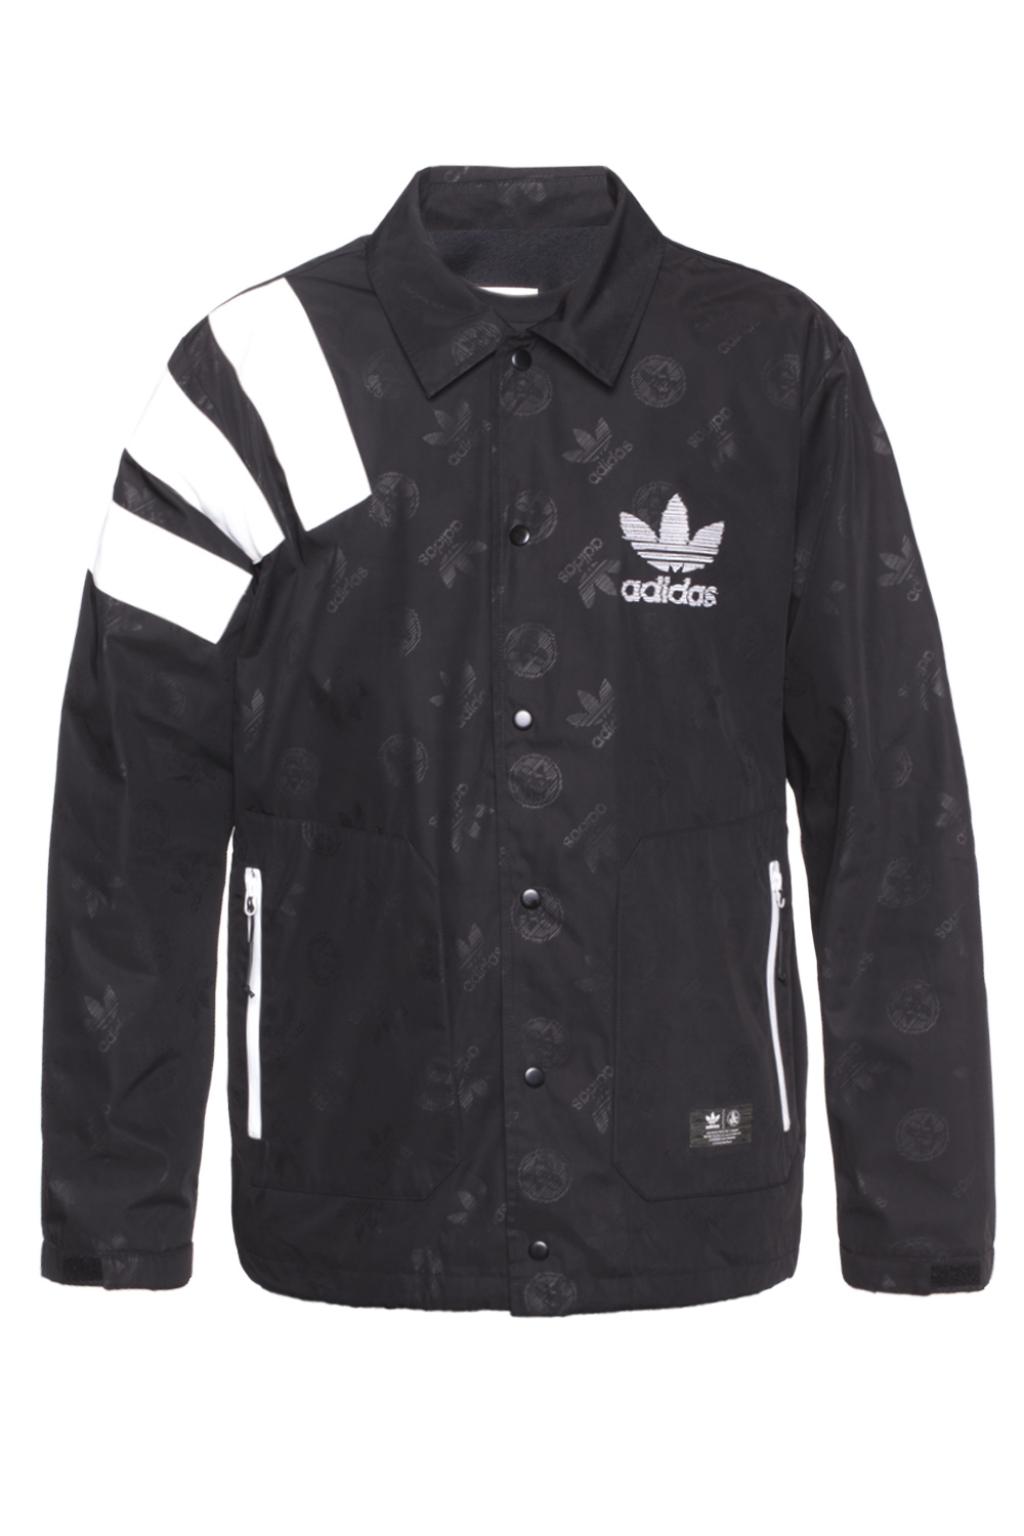 adidas jacket hk